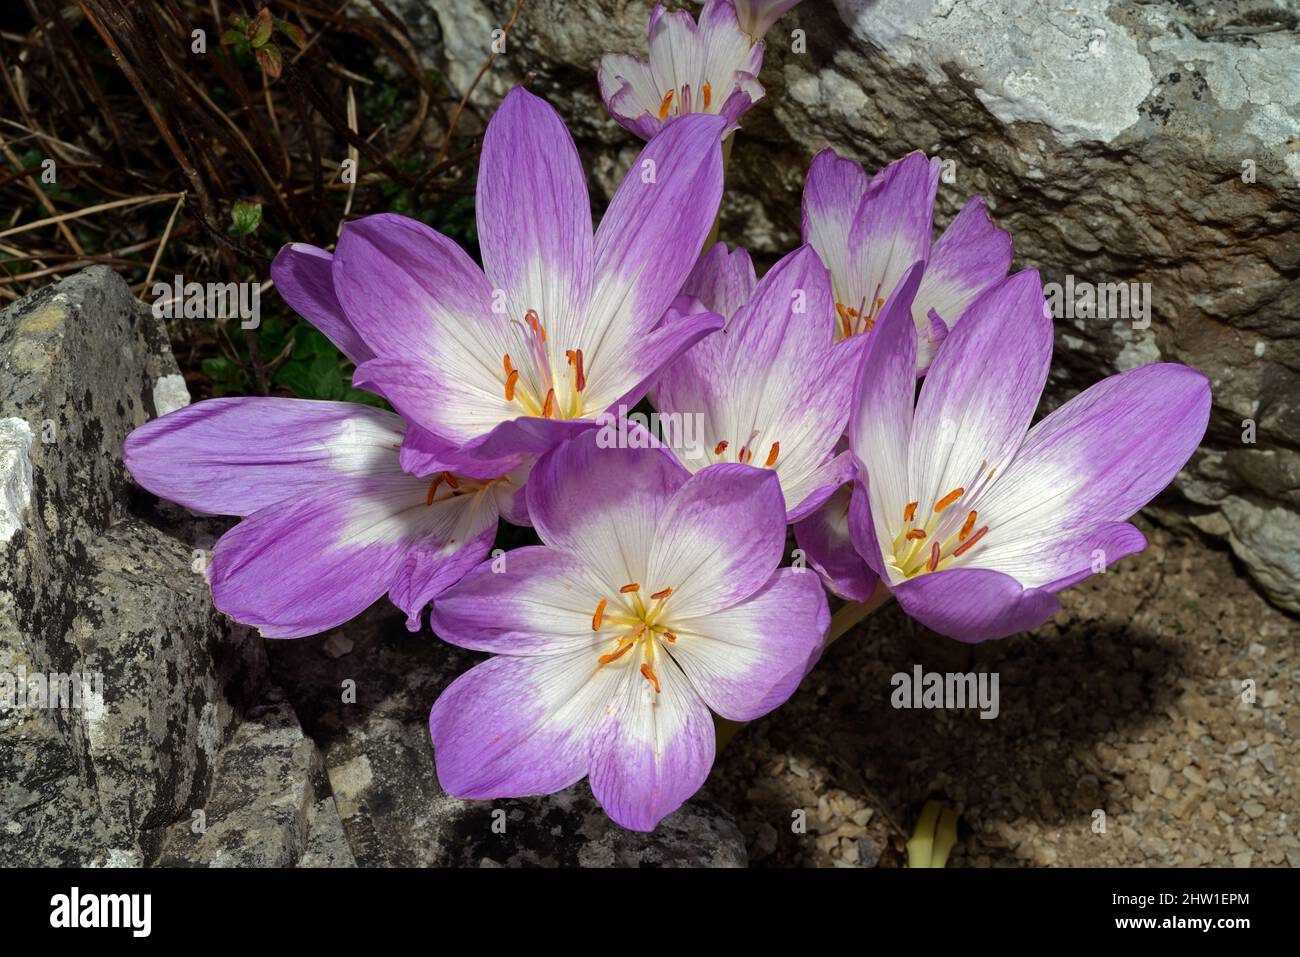 Colchicum speciosum (autumn crocus) is found in mountainous areas of northern Turkey, the Caucasus and northern Iran. Stock Photo